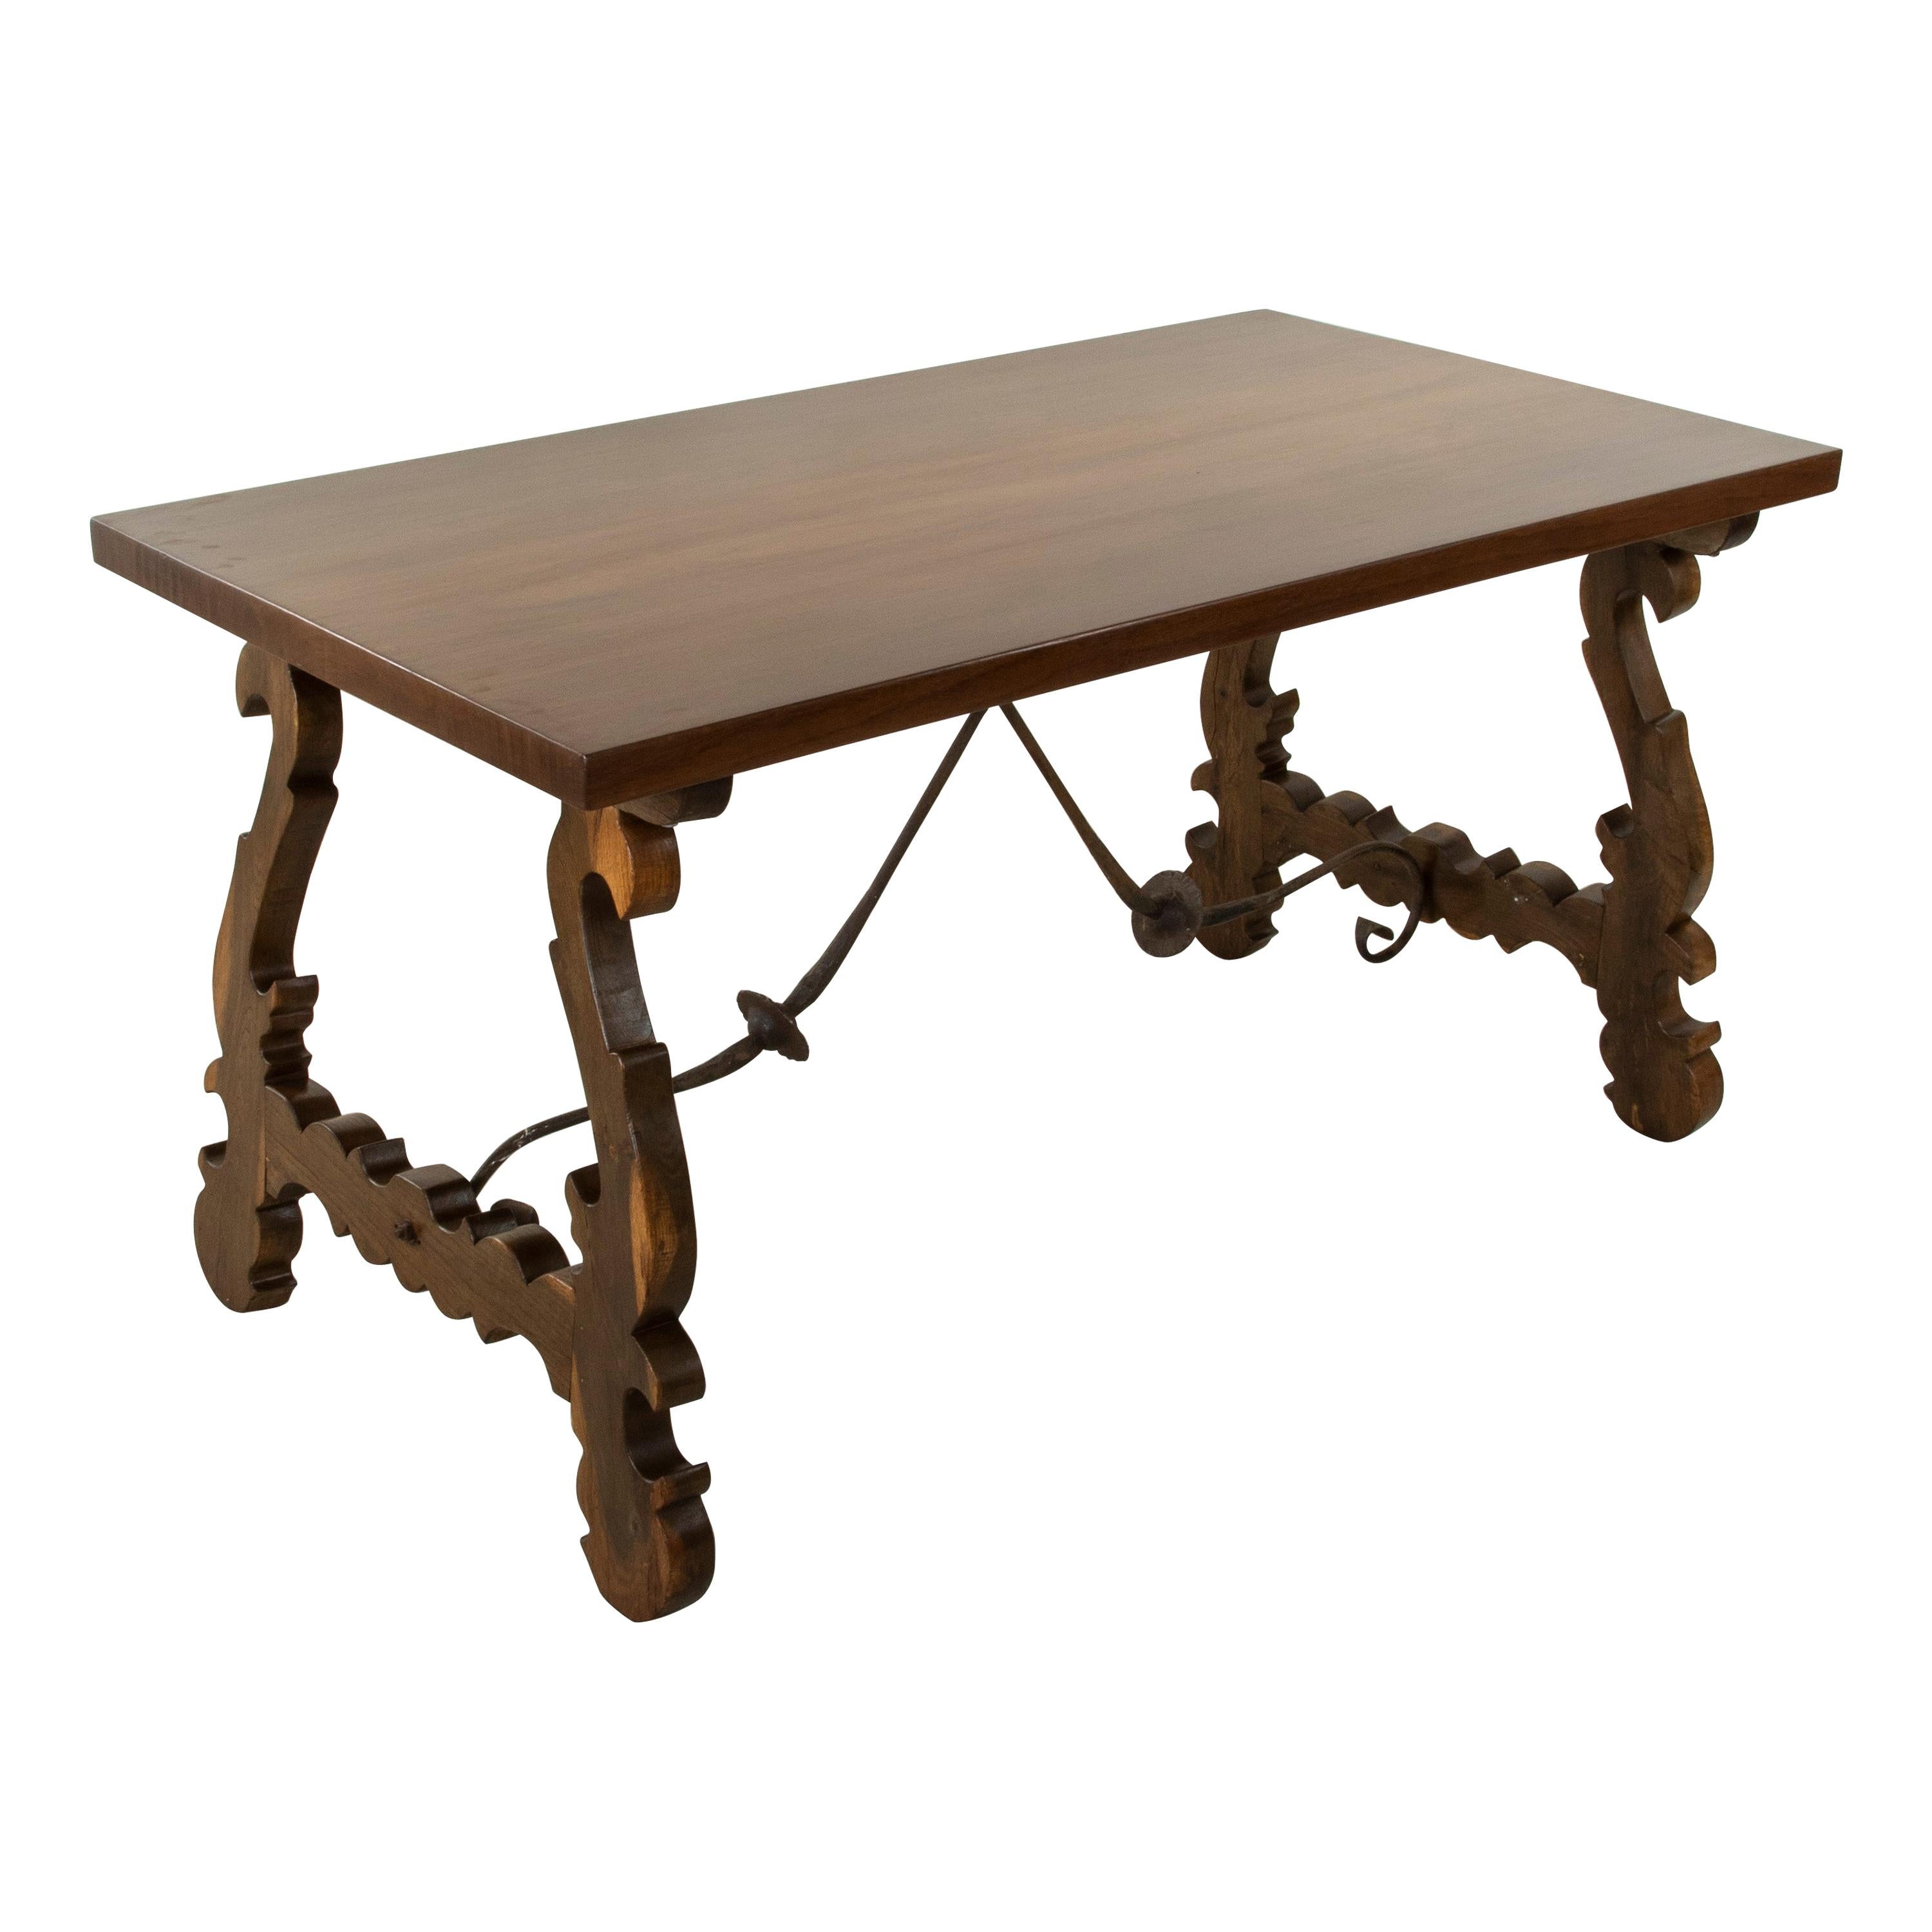 Artisan-Made Spanish Renaissance Writing Table with Single Plank Amaranth Top